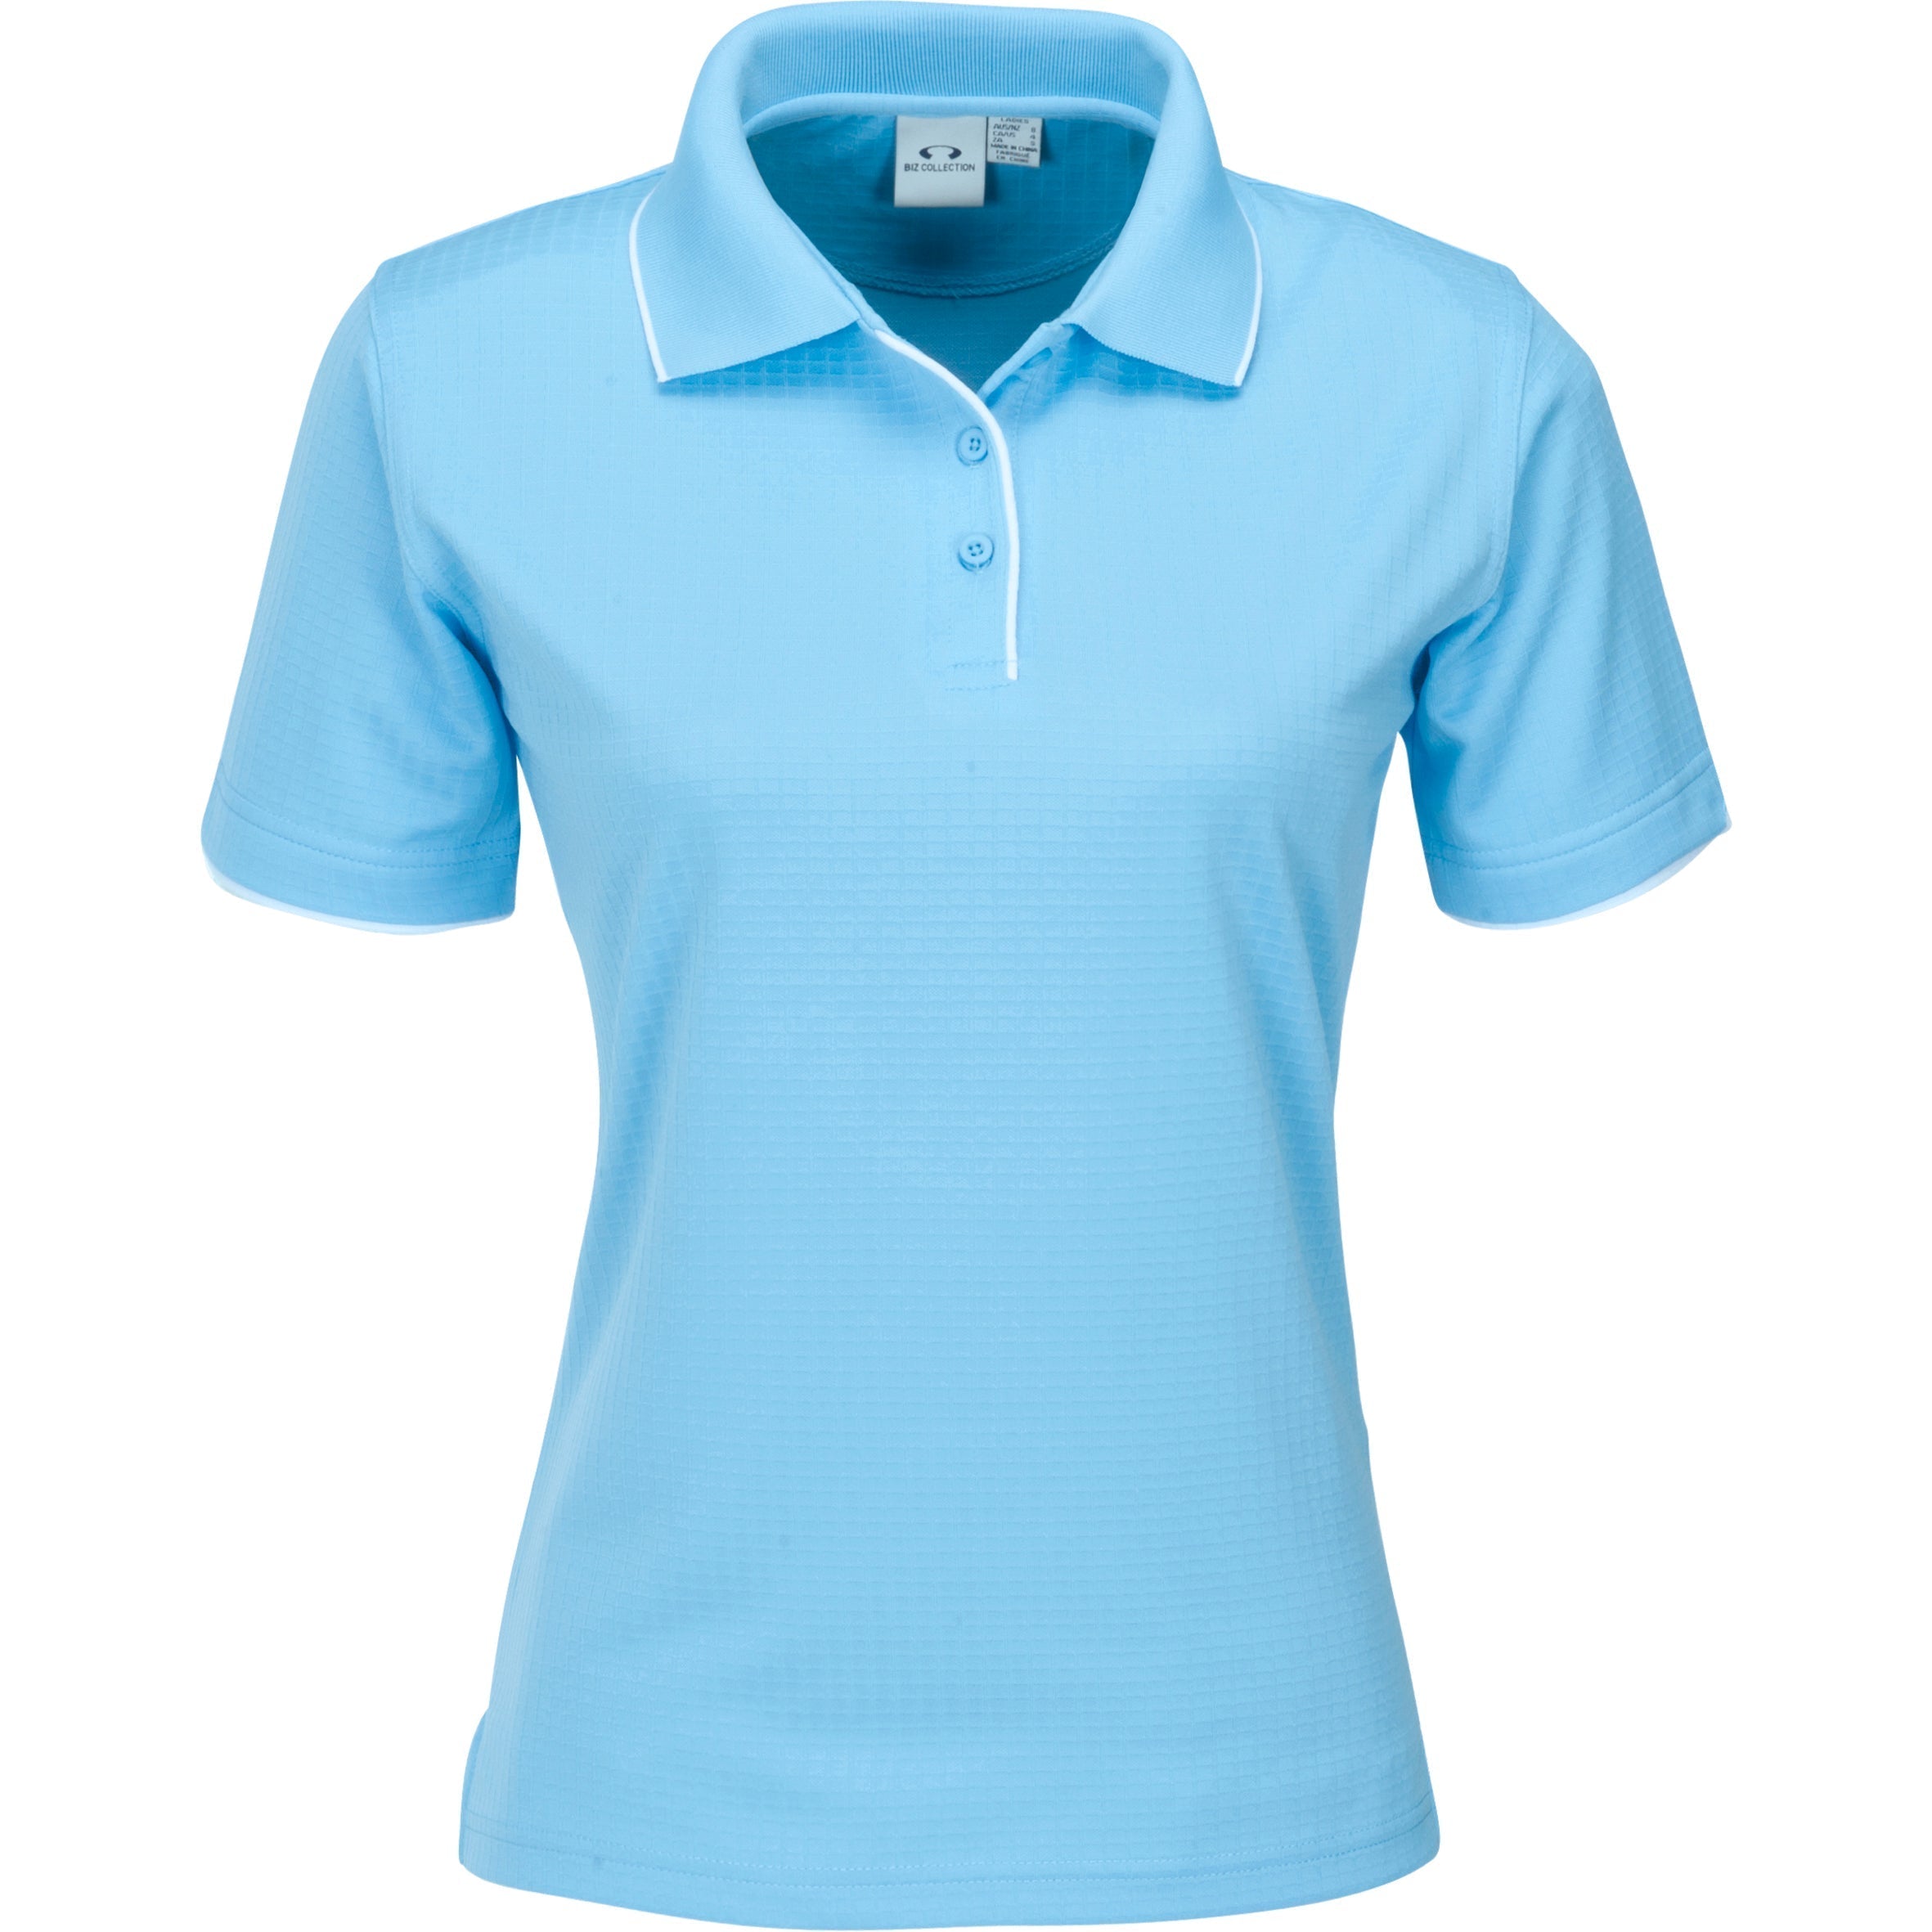 Ladies Elite Golf Shirt-2XL-Light Blue-LB